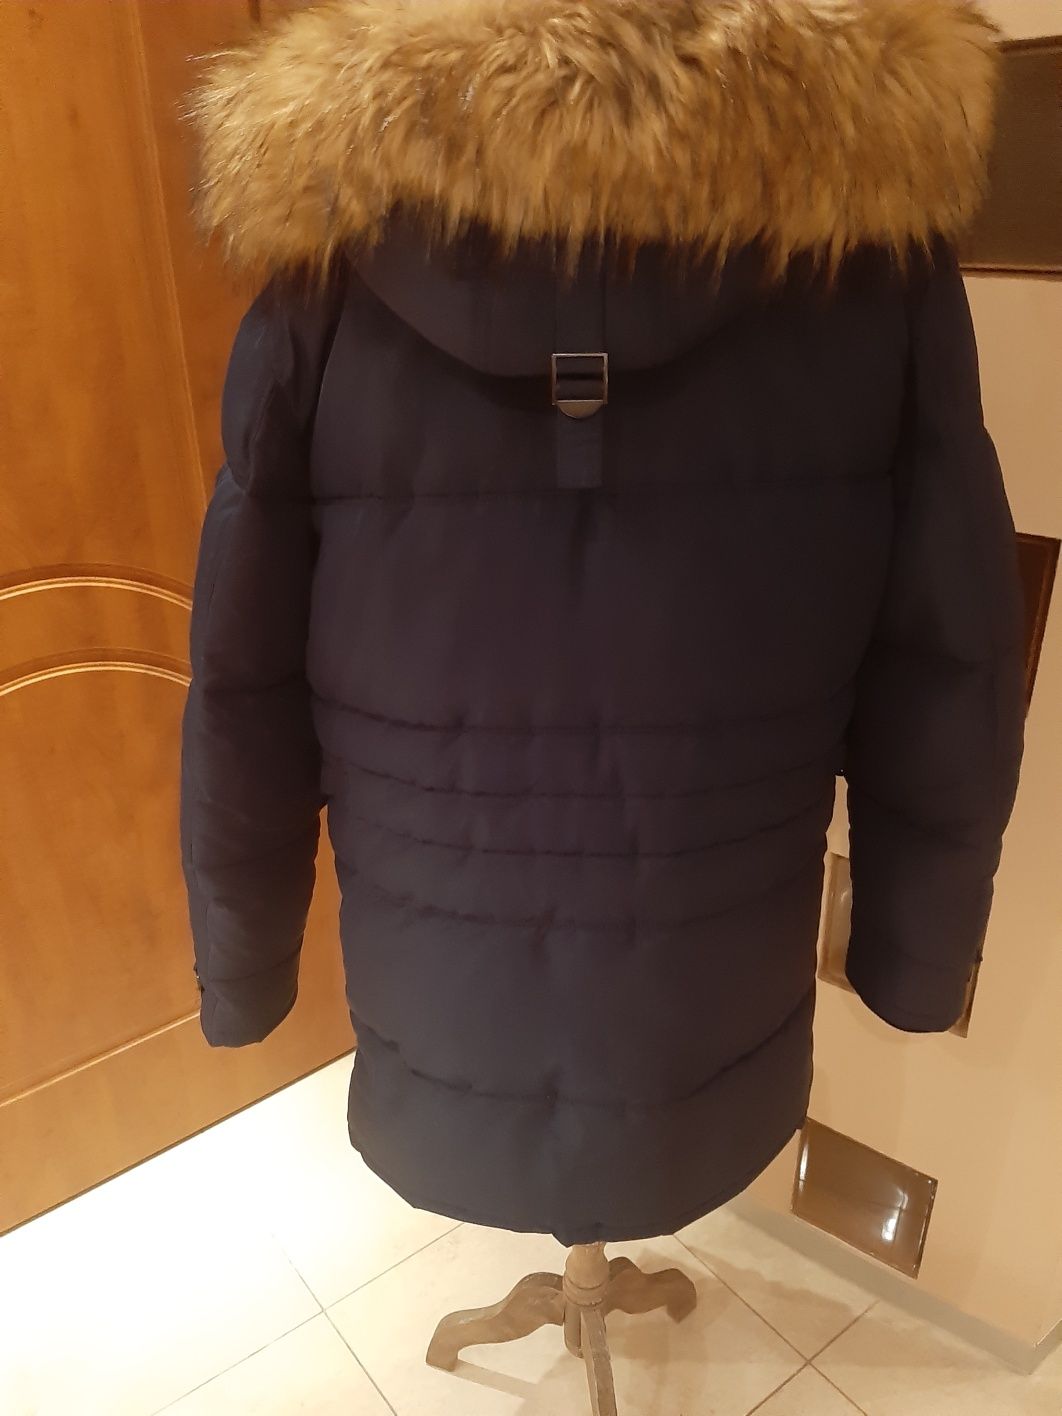 Płaszcz zara męski granat zima ciepła kaptur długa tkmaxx Premium jako